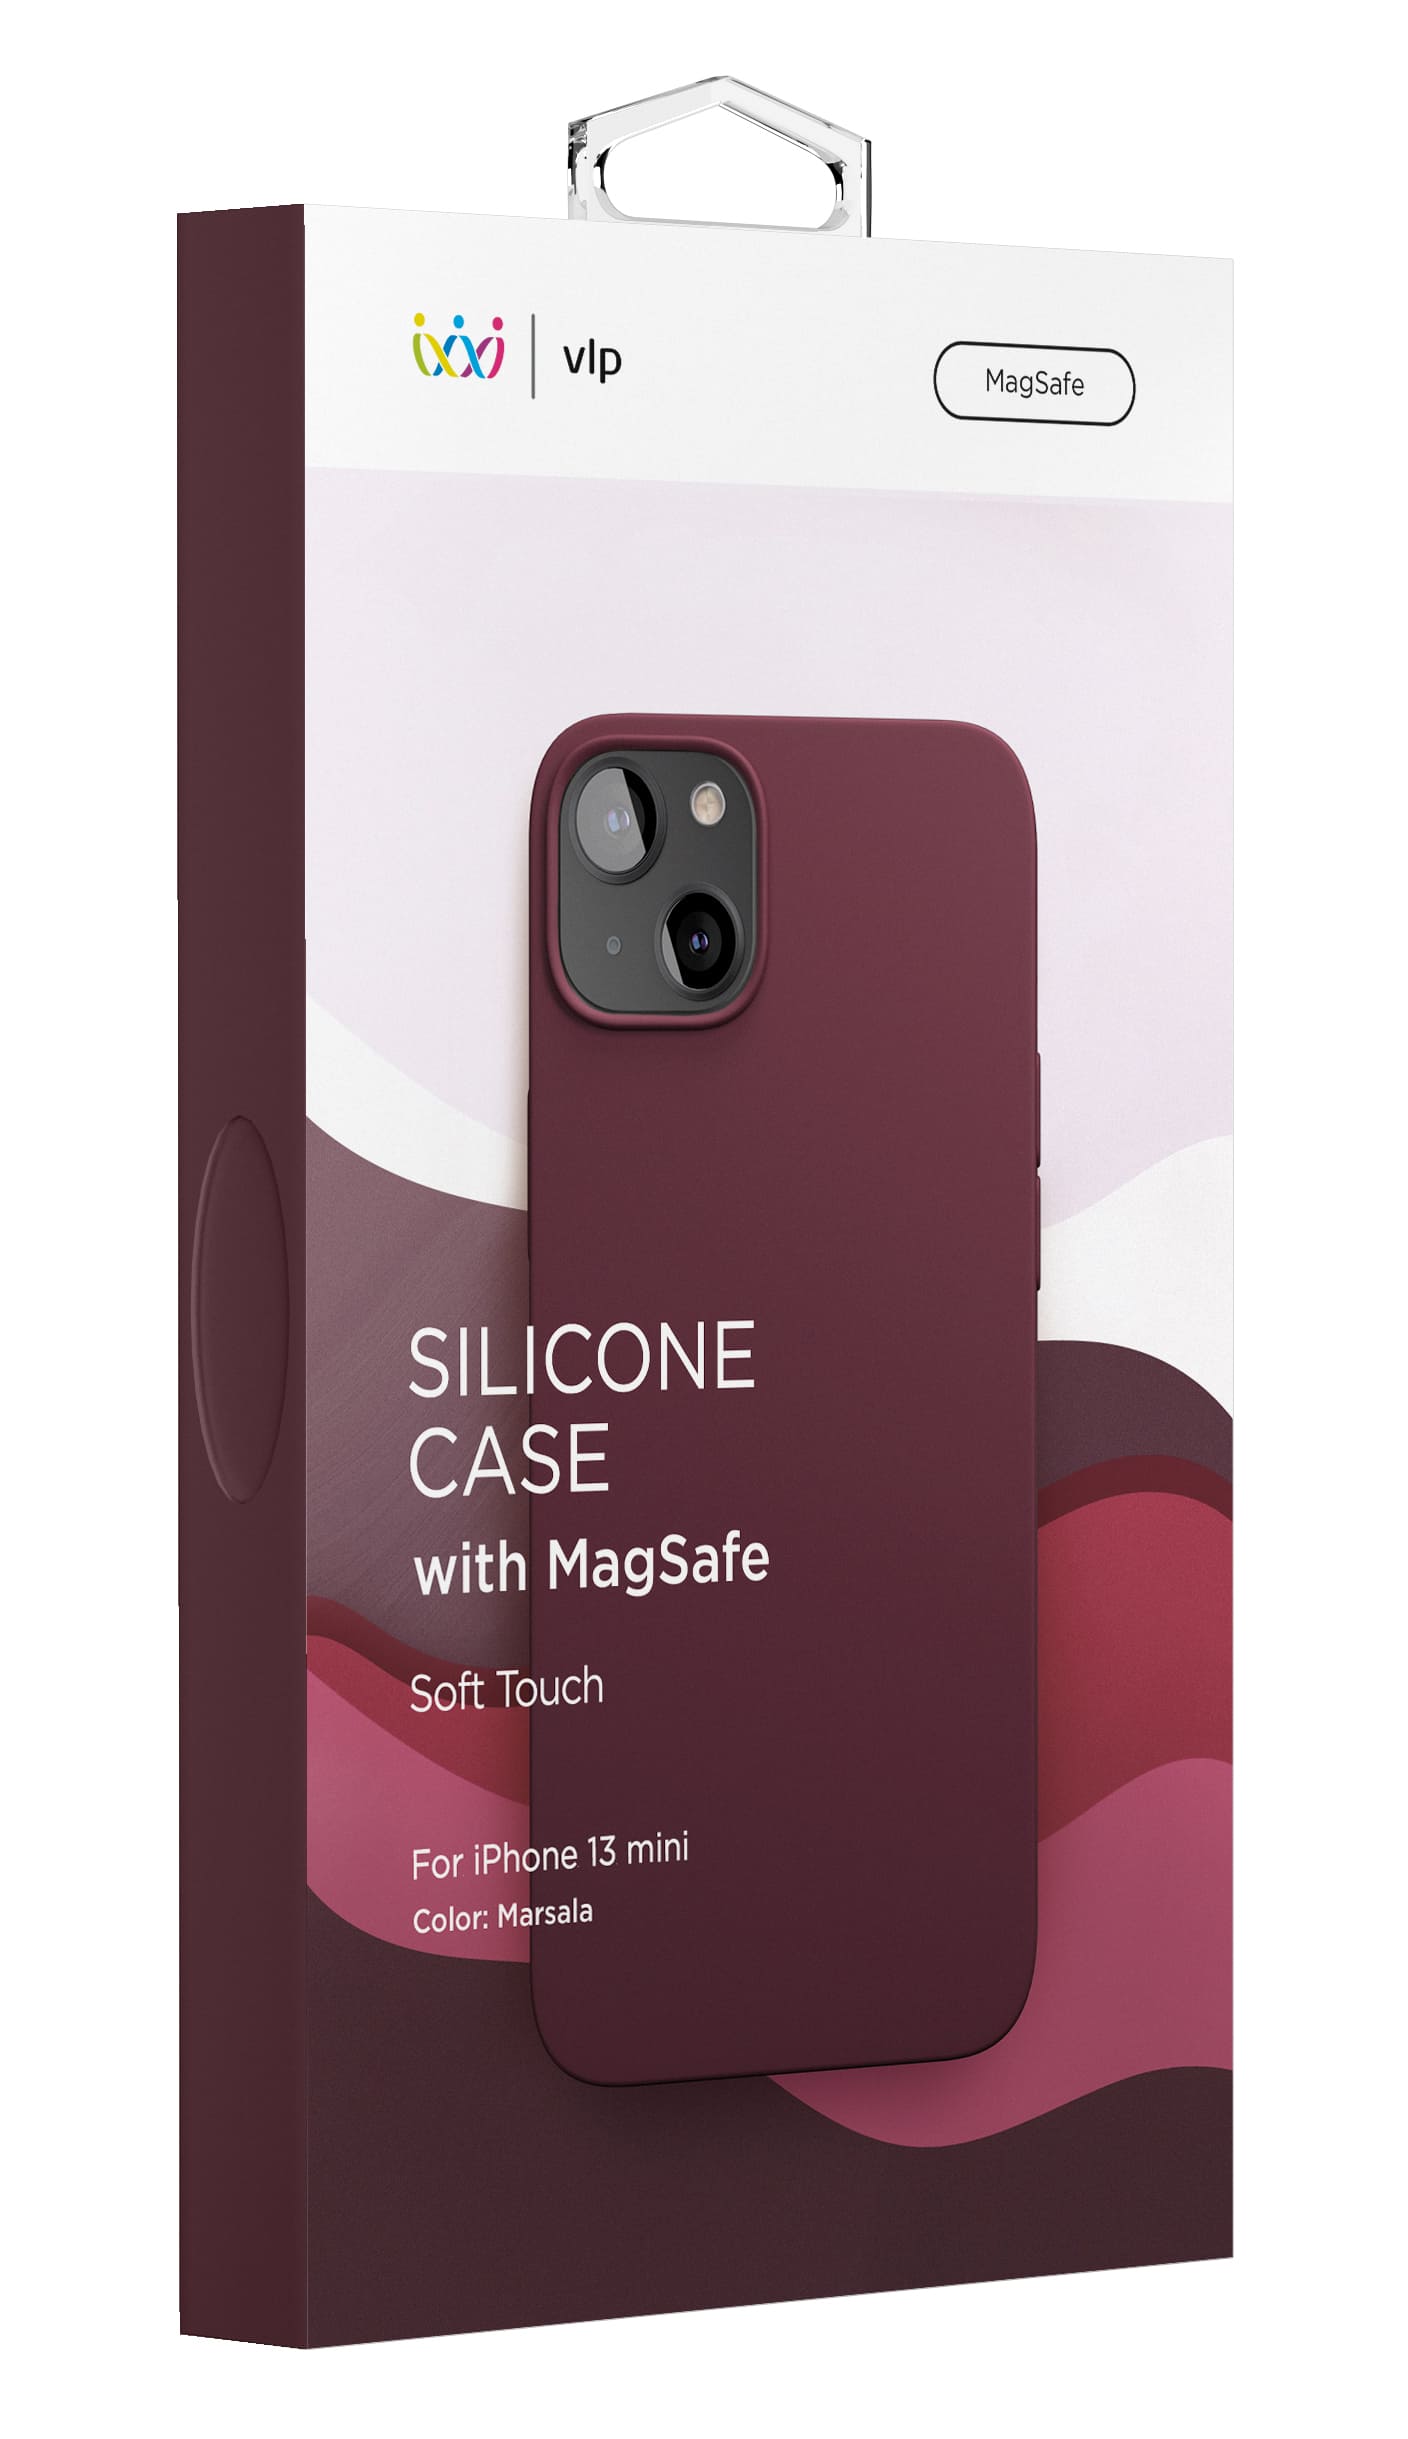 Фото — Чехол для смартфона vlp Silicone case with MagSafe для iPhone 13 mini, «марсала»